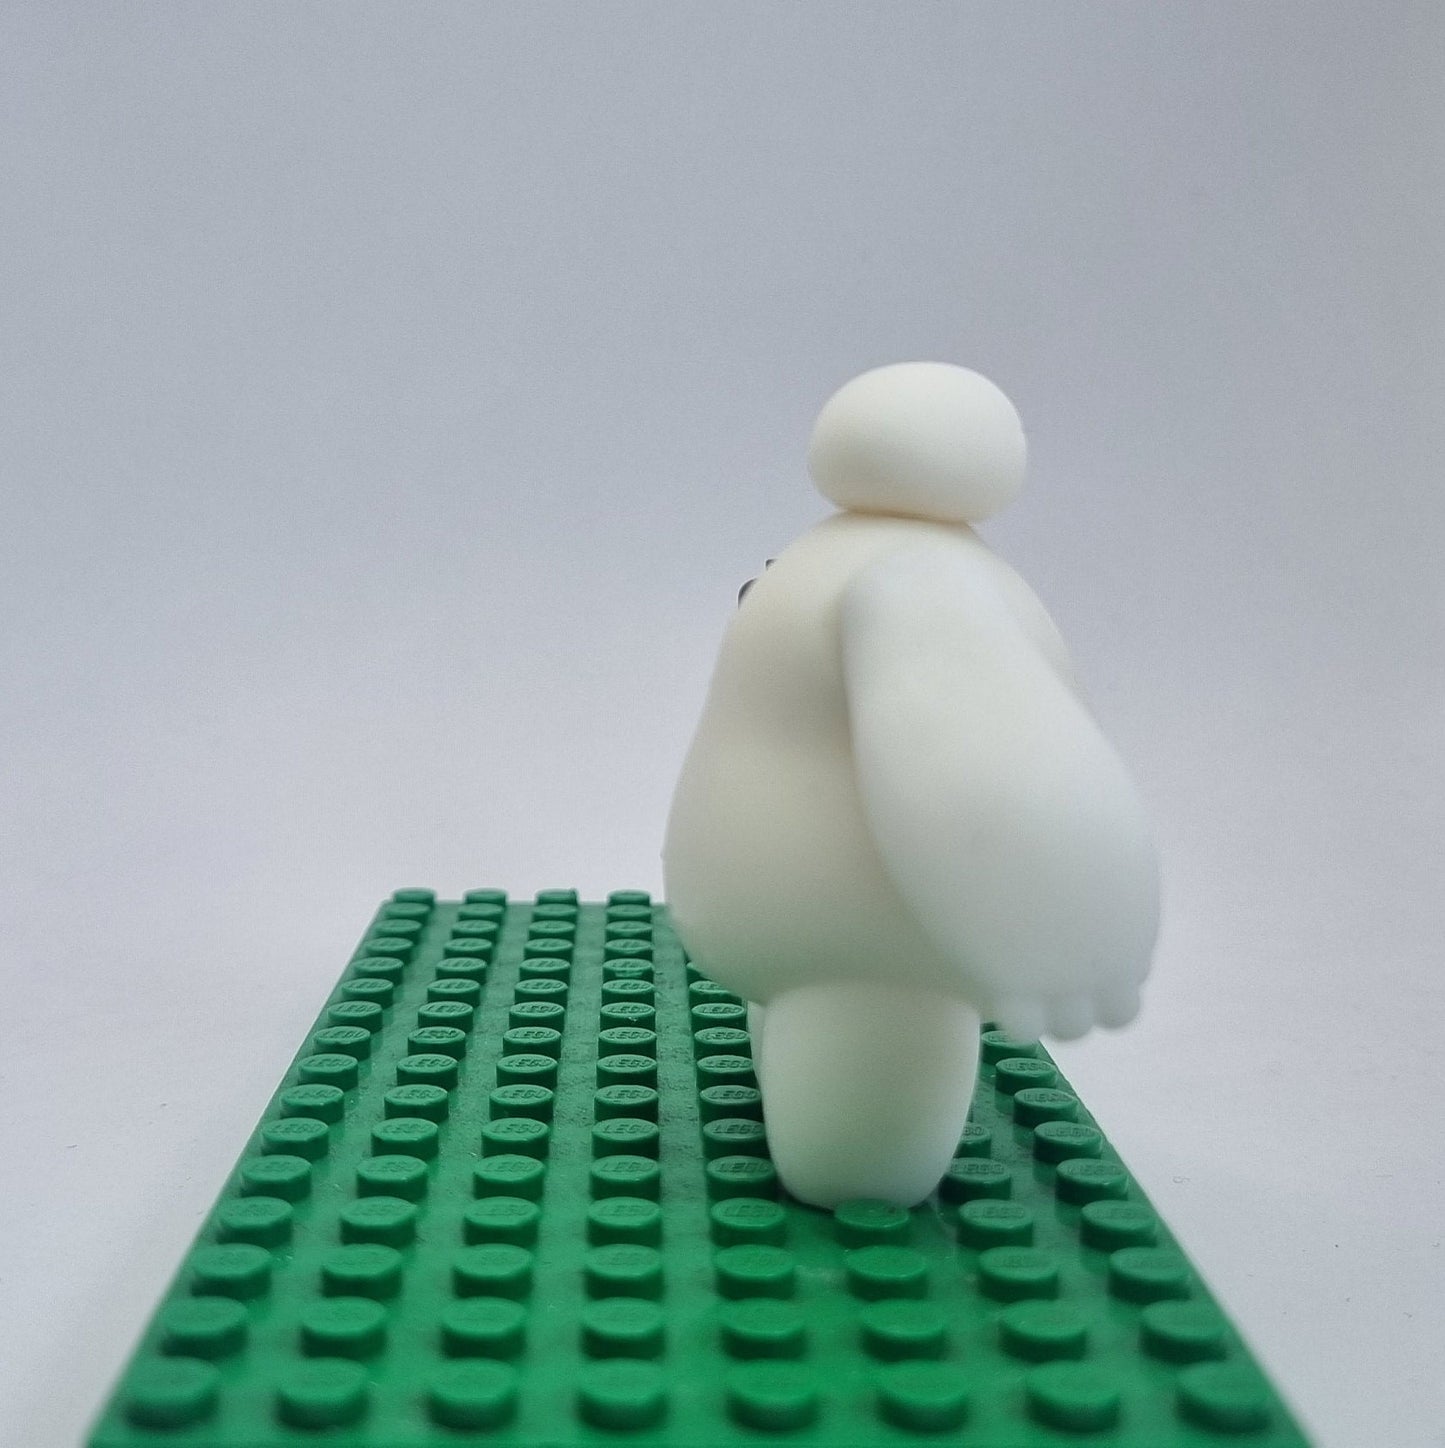 Custom 3D printed building toy big white marshmallow balloon character bigfig!